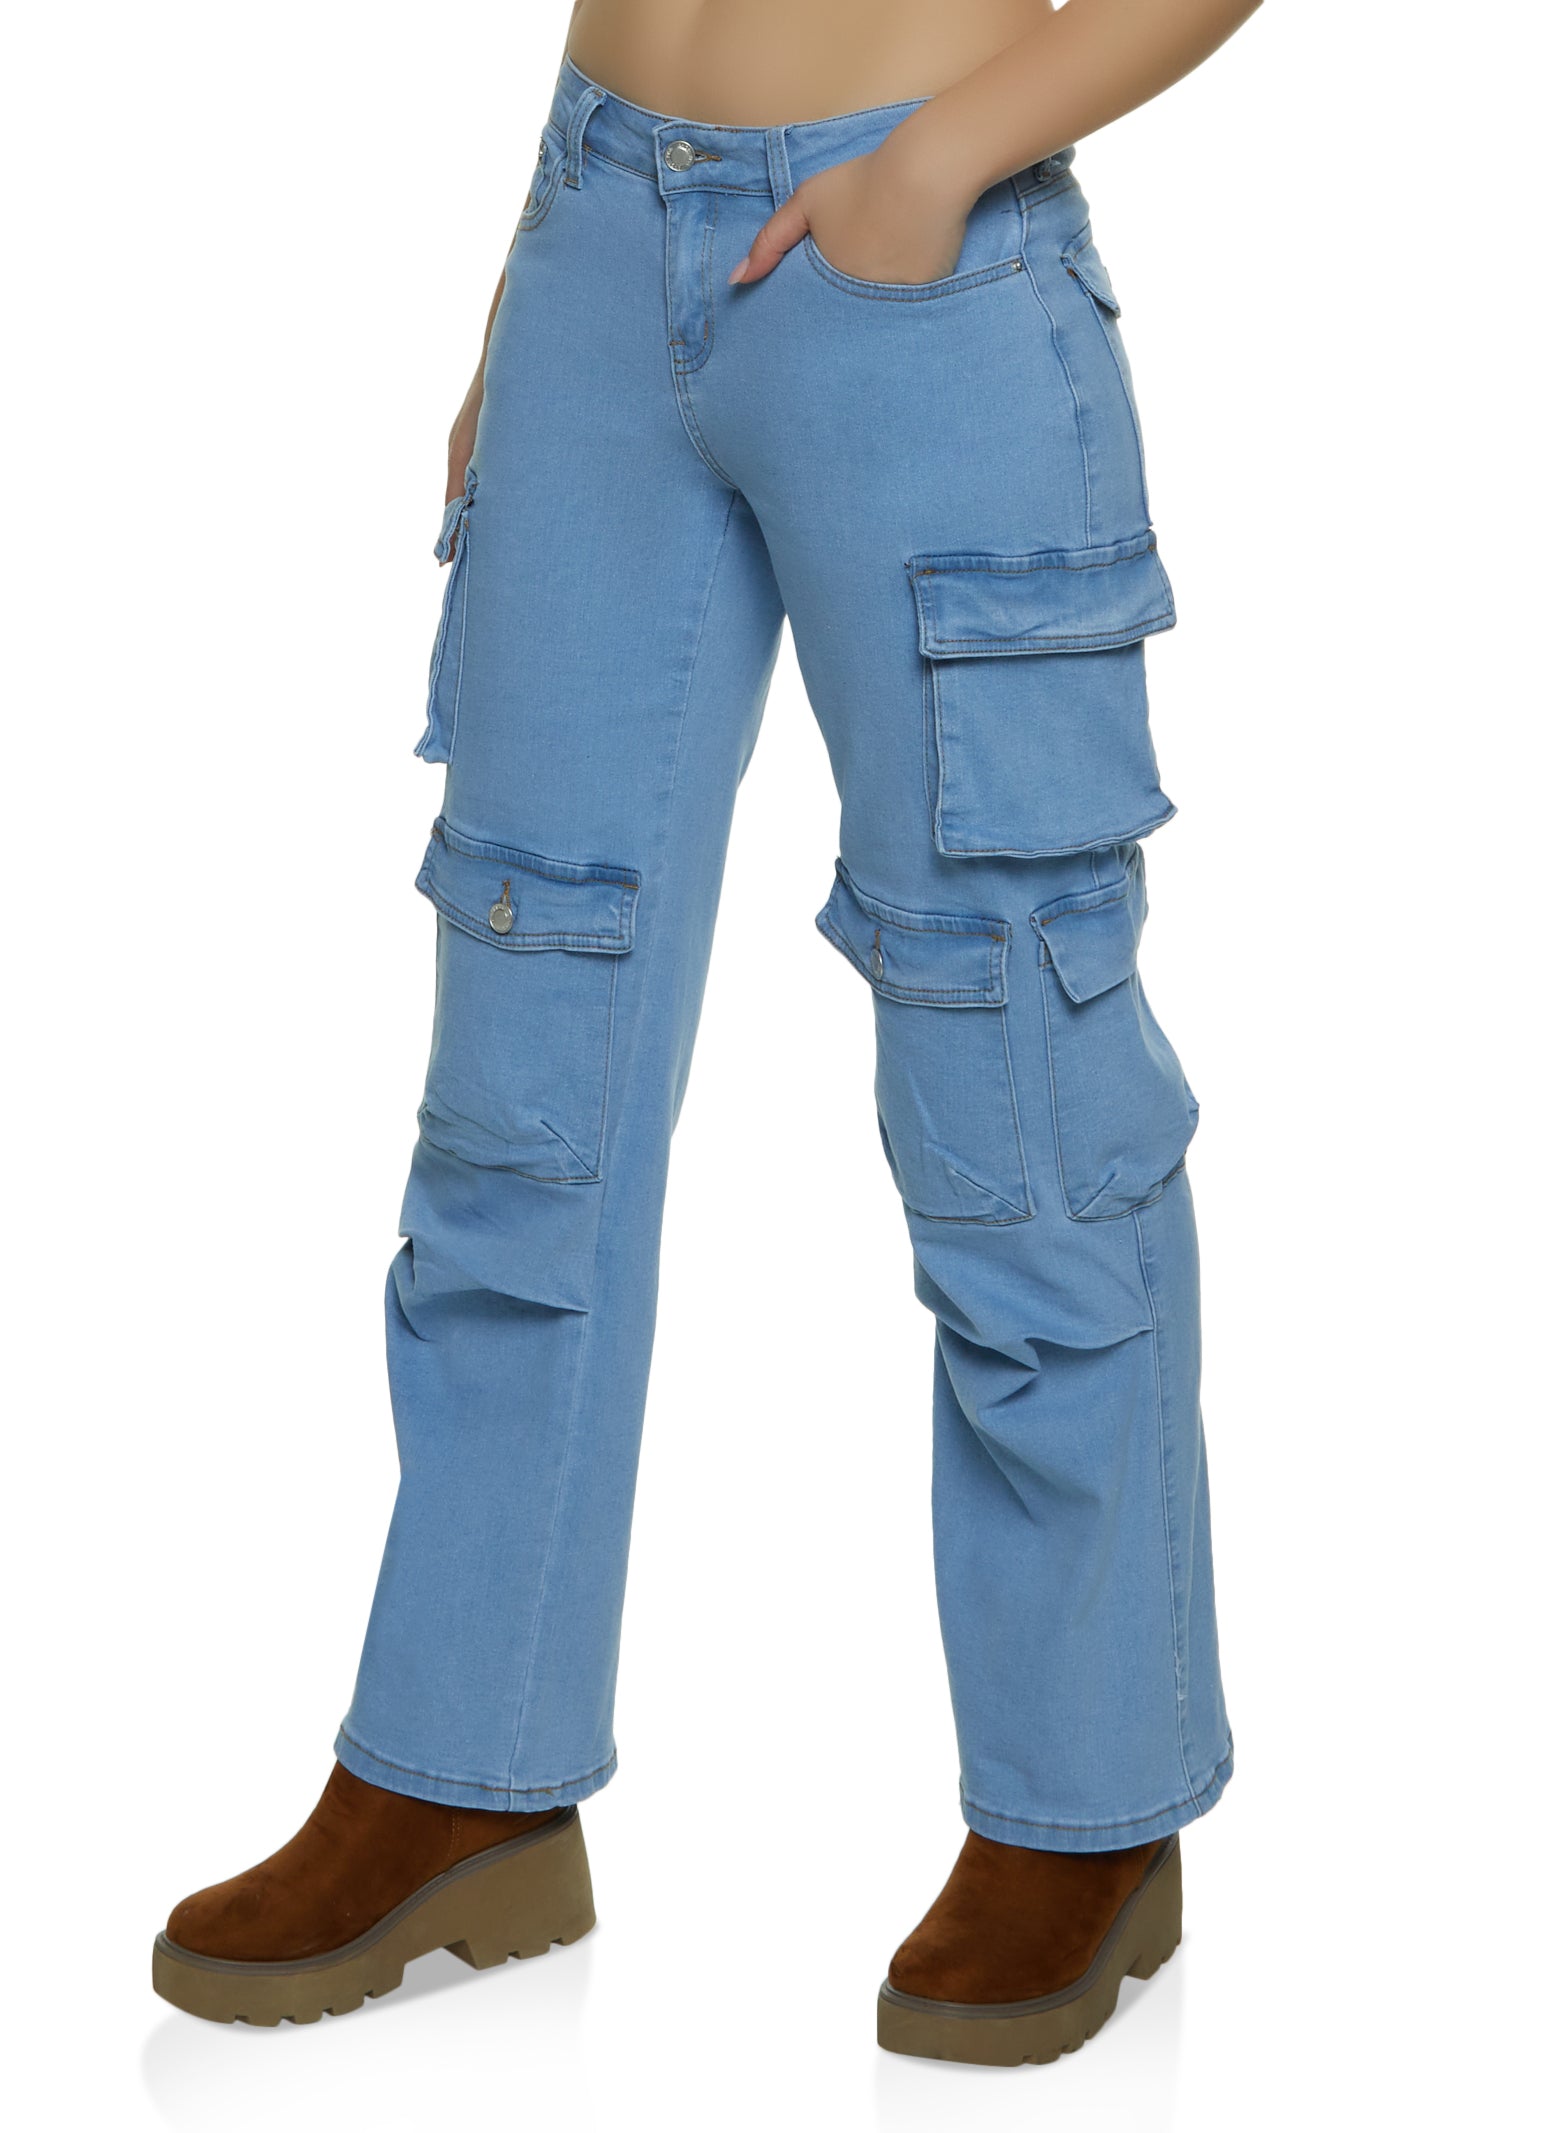 Flared Low Cargo Jeans - Light denim blue - Ladies